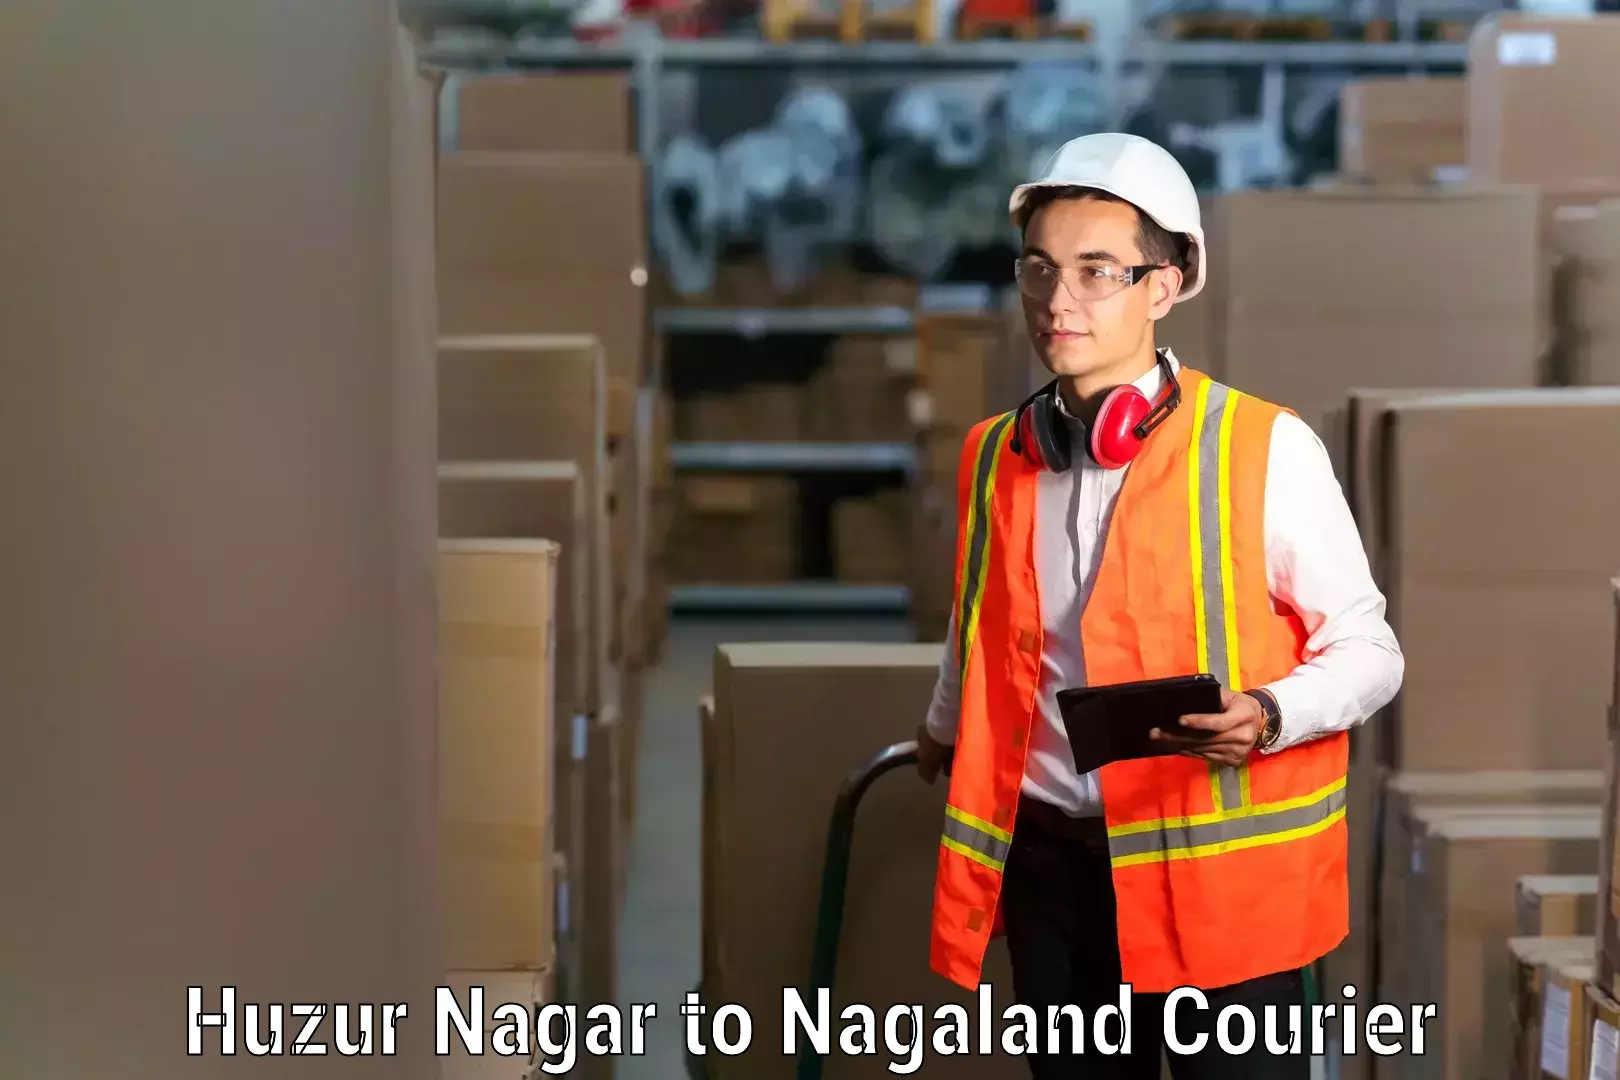 Furniture relocation experts Huzur Nagar to Nagaland